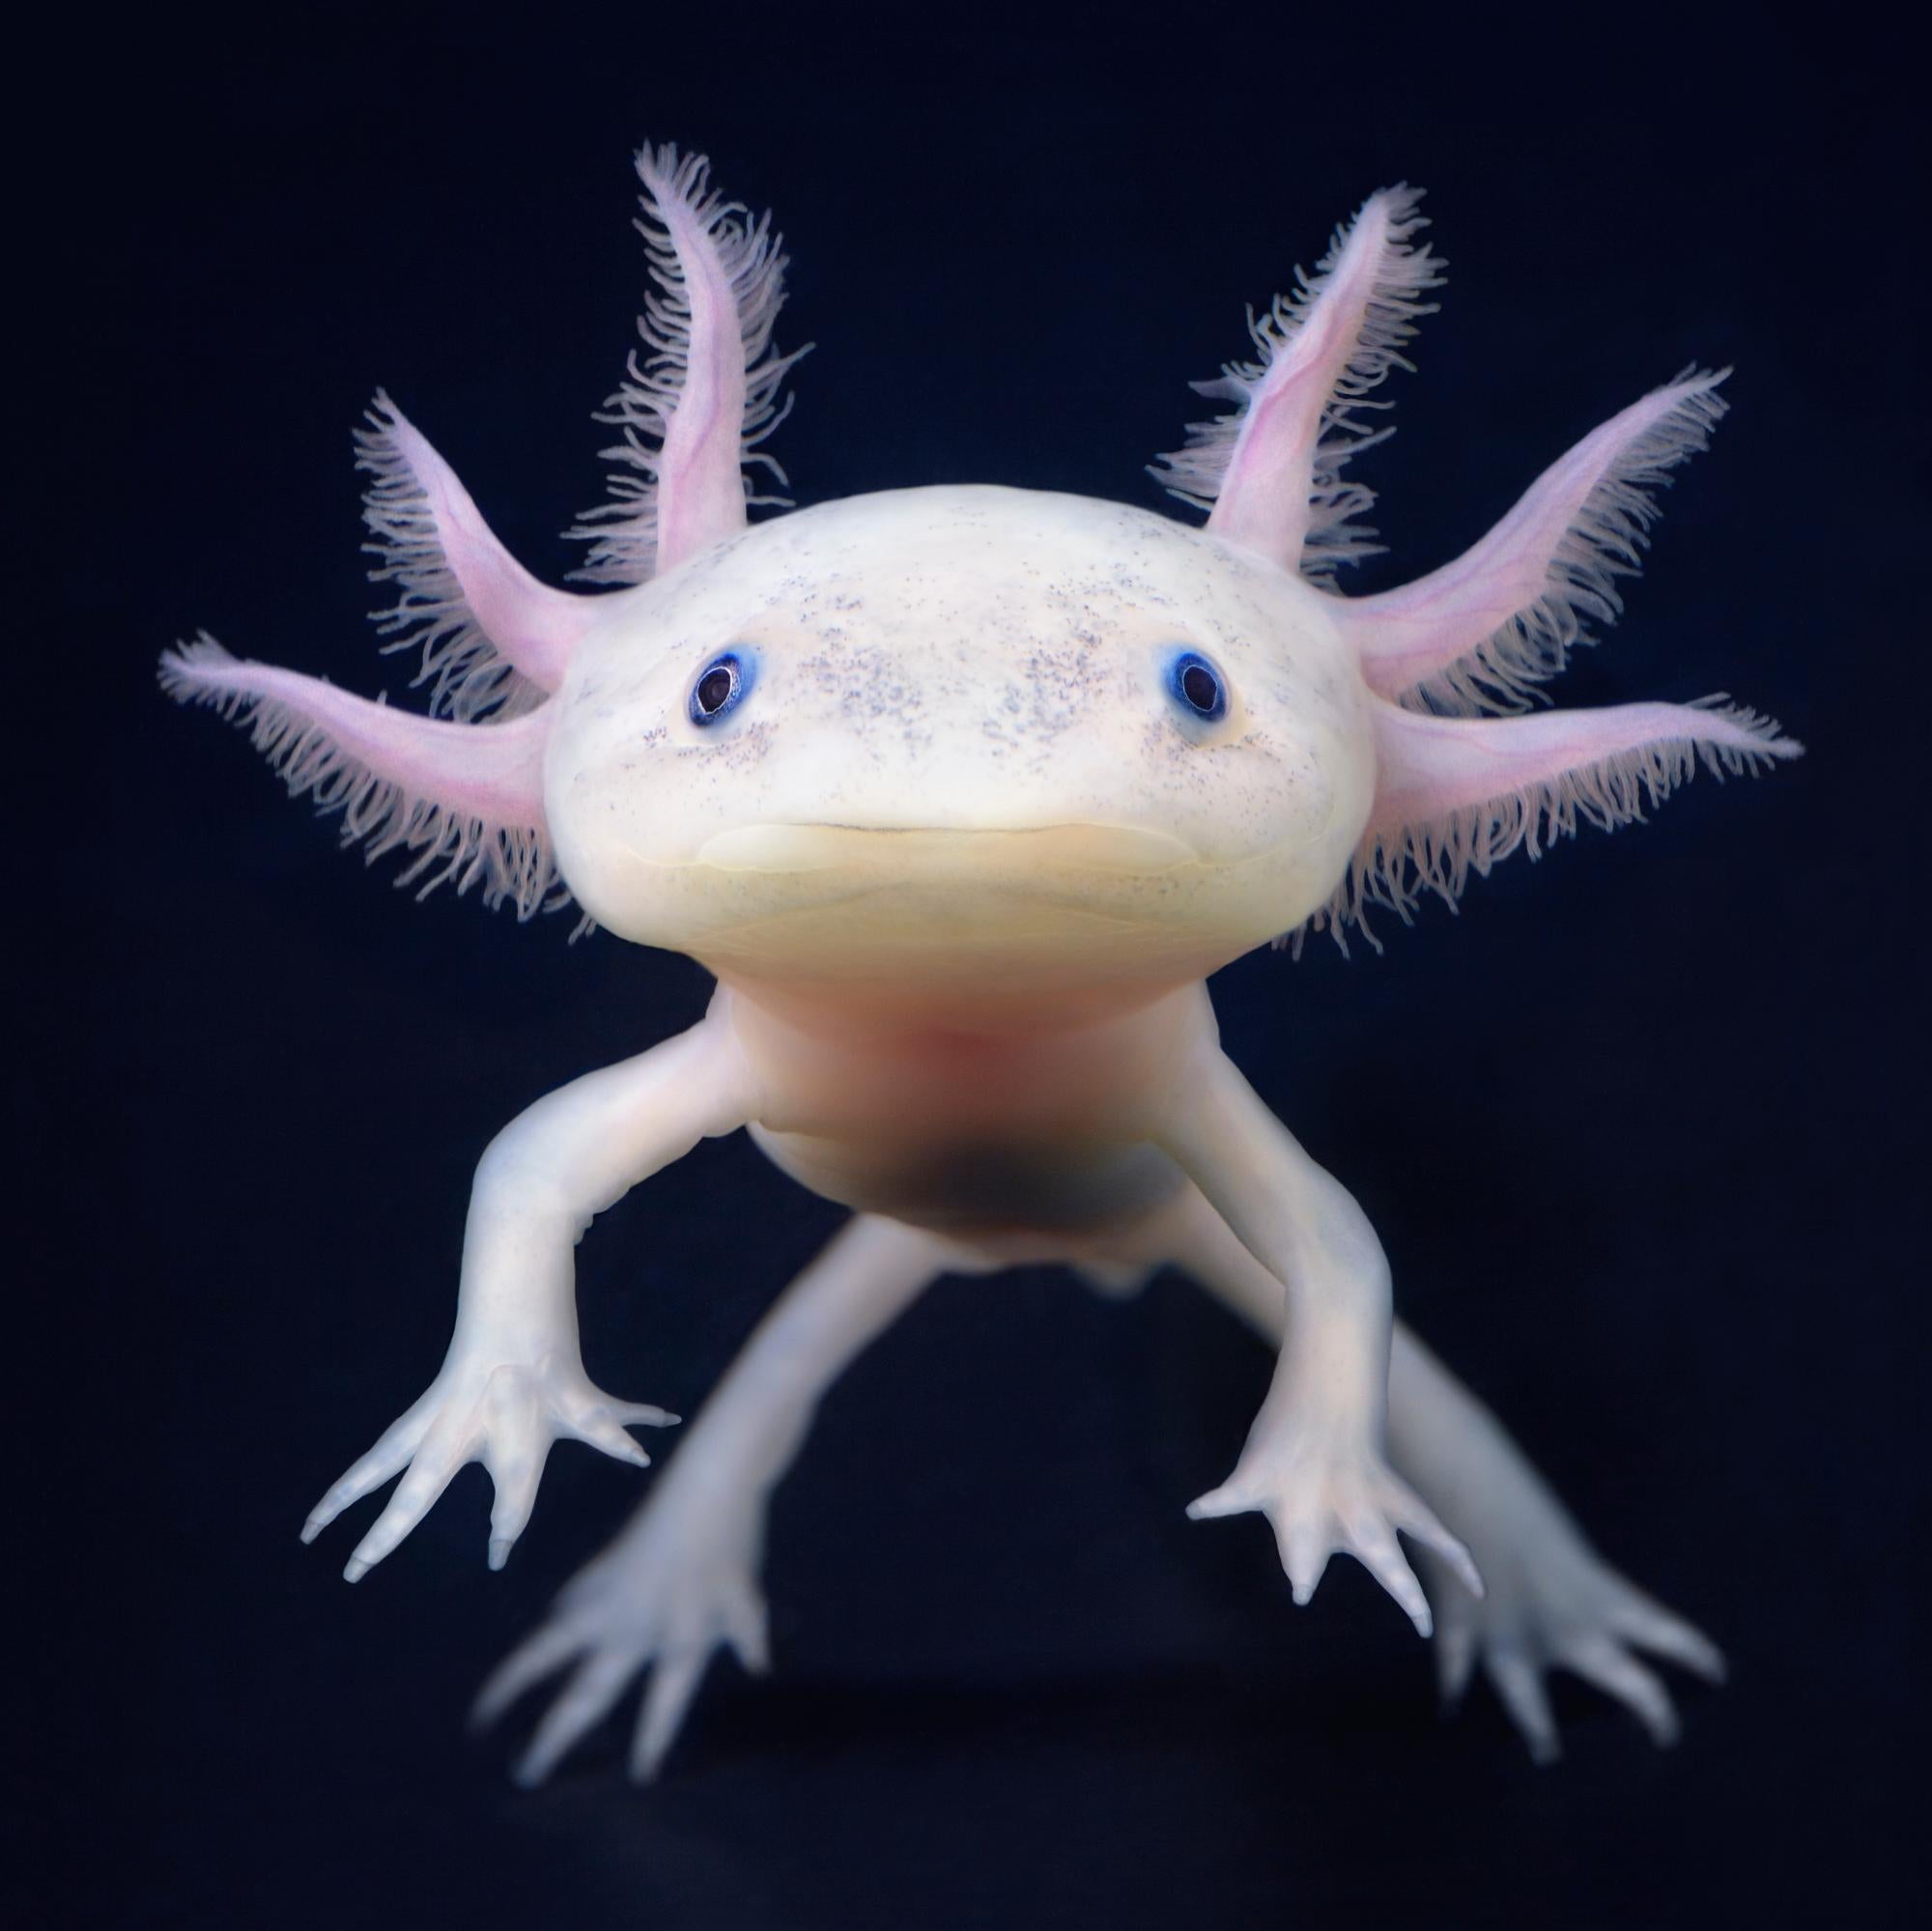 Tim Flach Portrait Photograph - Axolotl - Contemporary British Art, Animal Photography, Underwater, Walking Fish